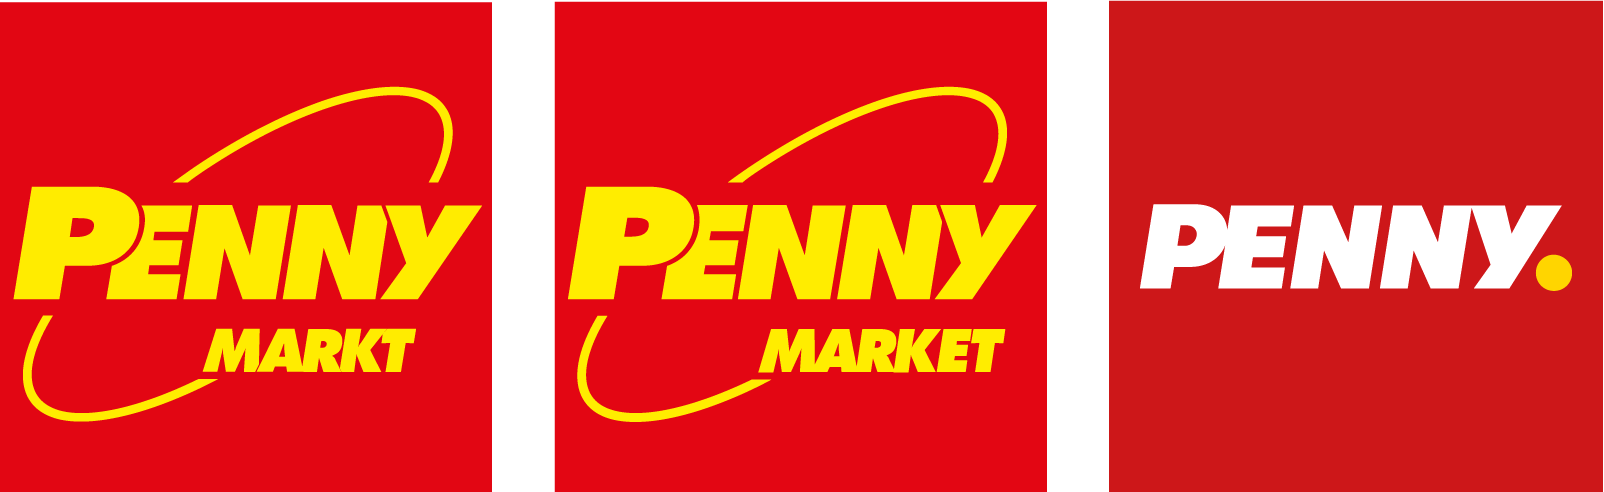 PENNY (Discount International) - REWE Group